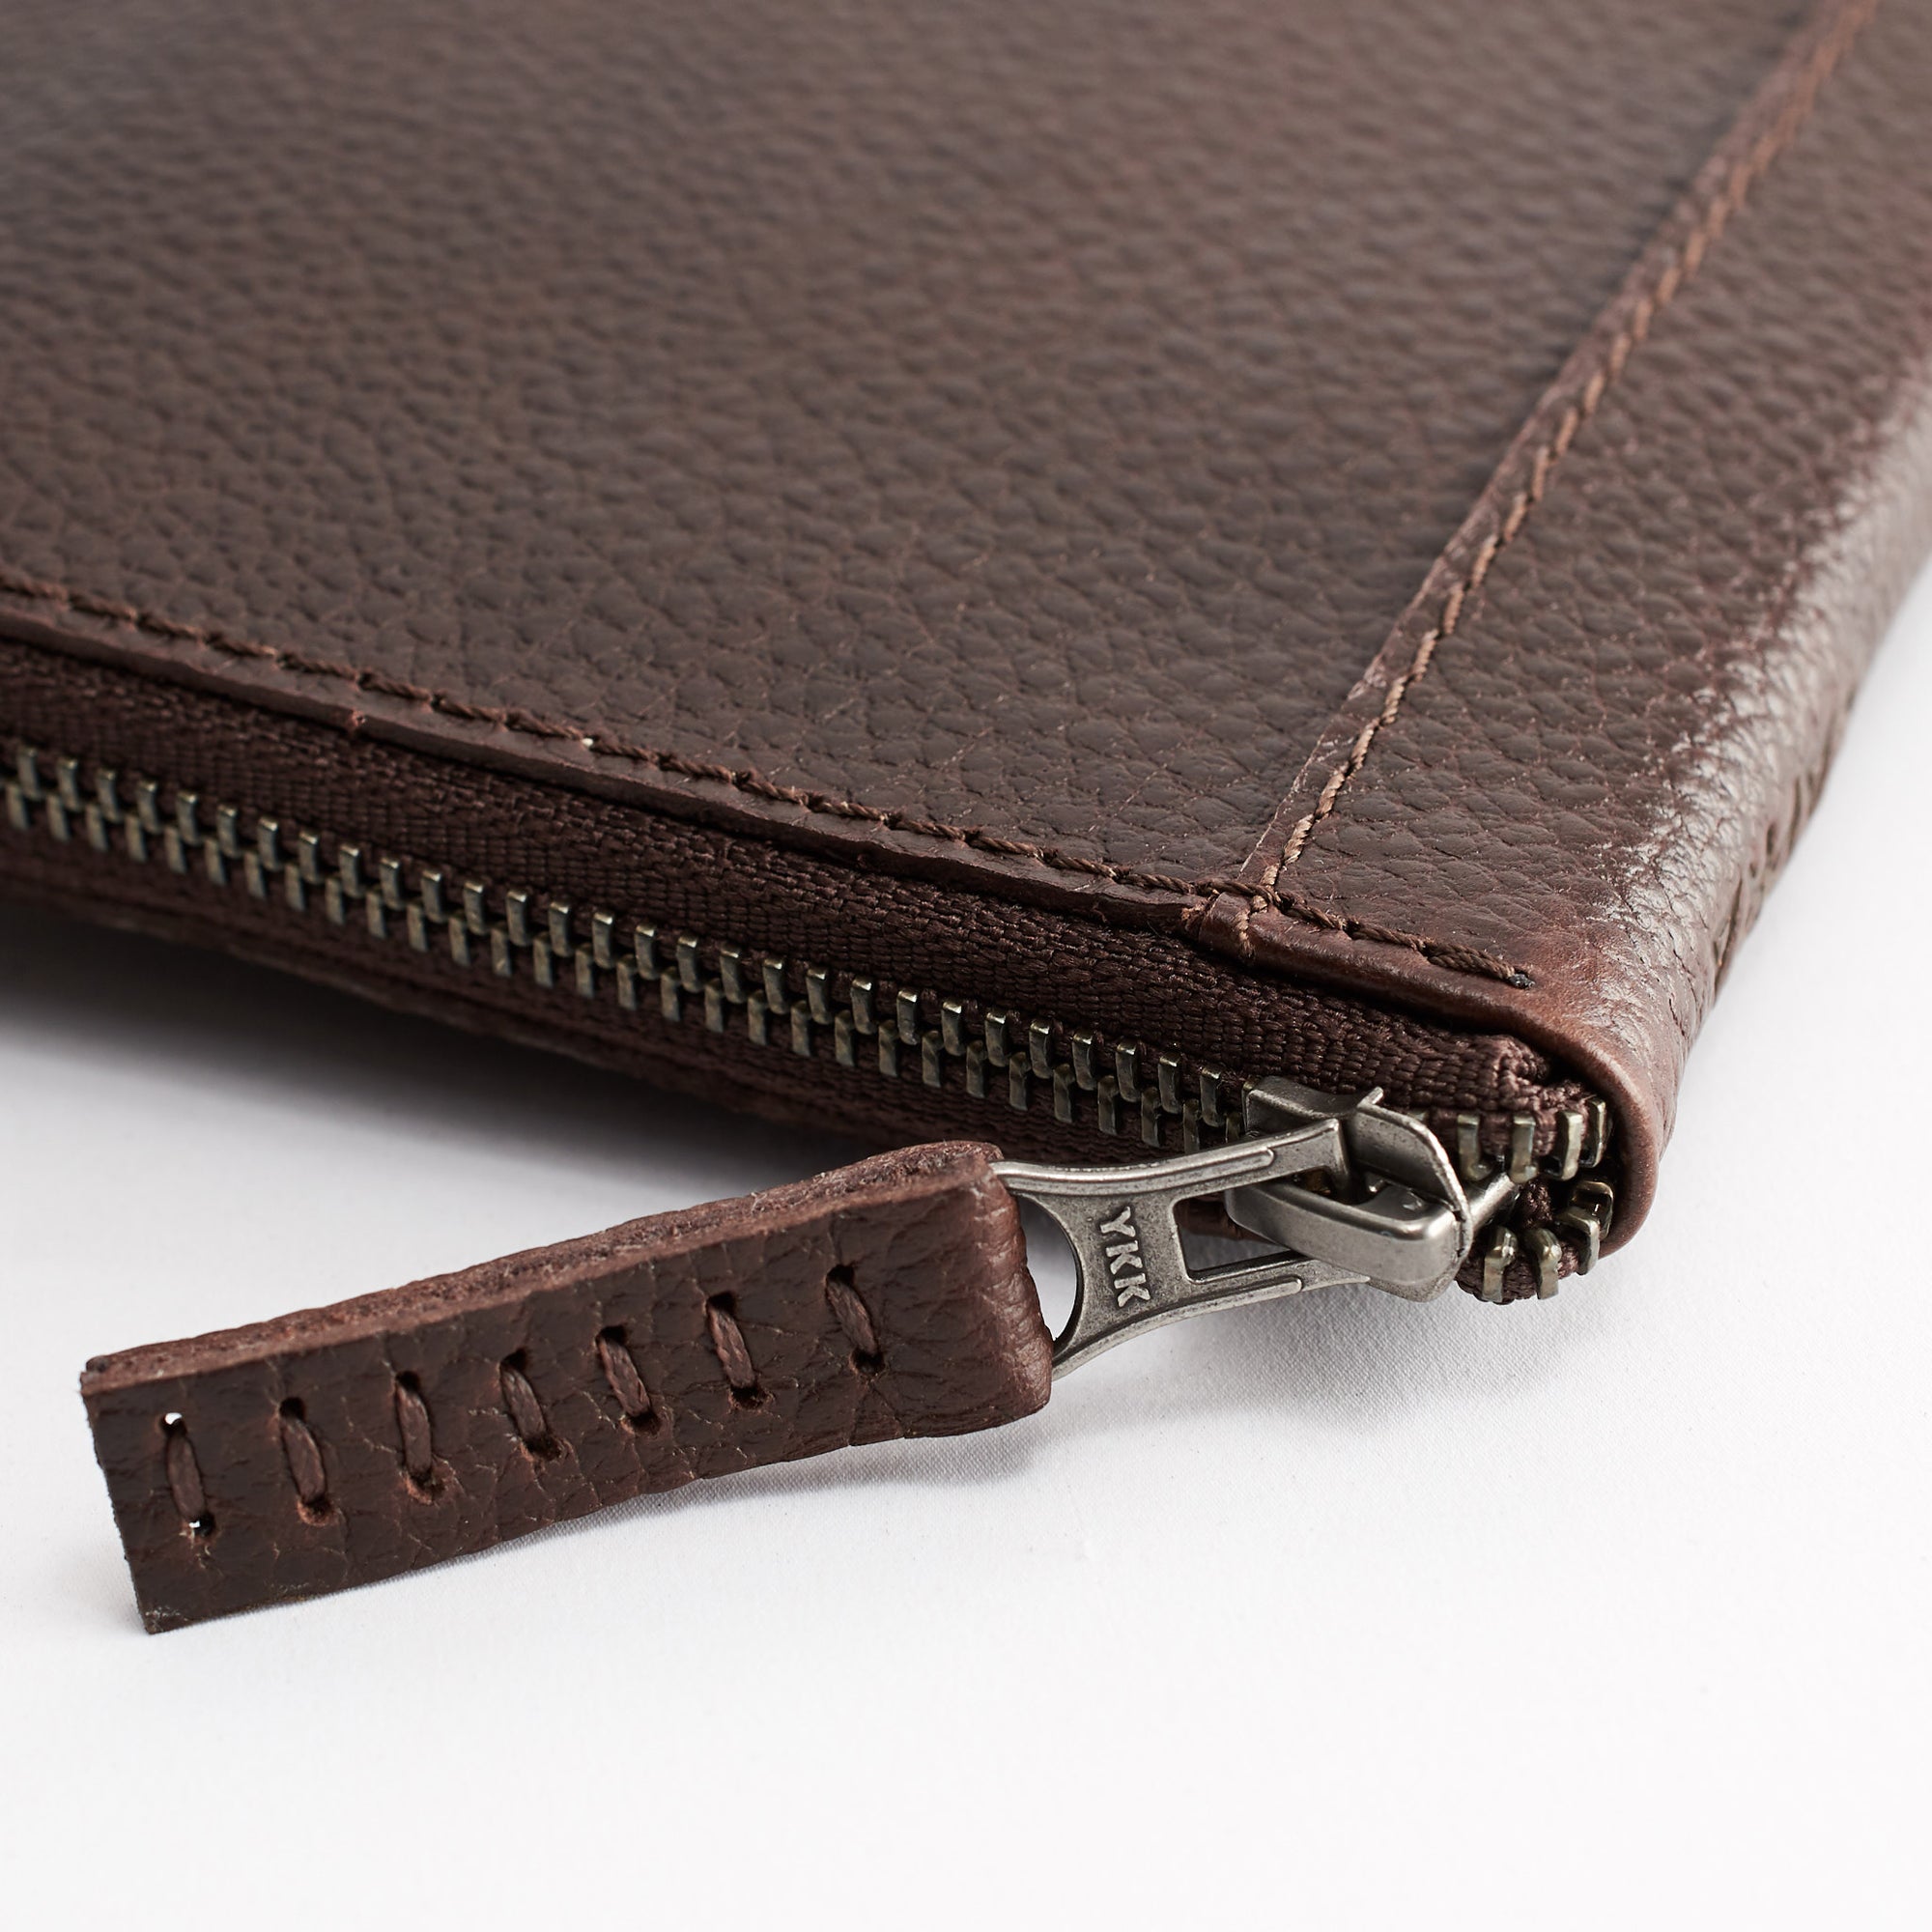 YKK metallic zippers. Dark brown Passport Holder for travelers, document organizer, travel journal by Capra Leather